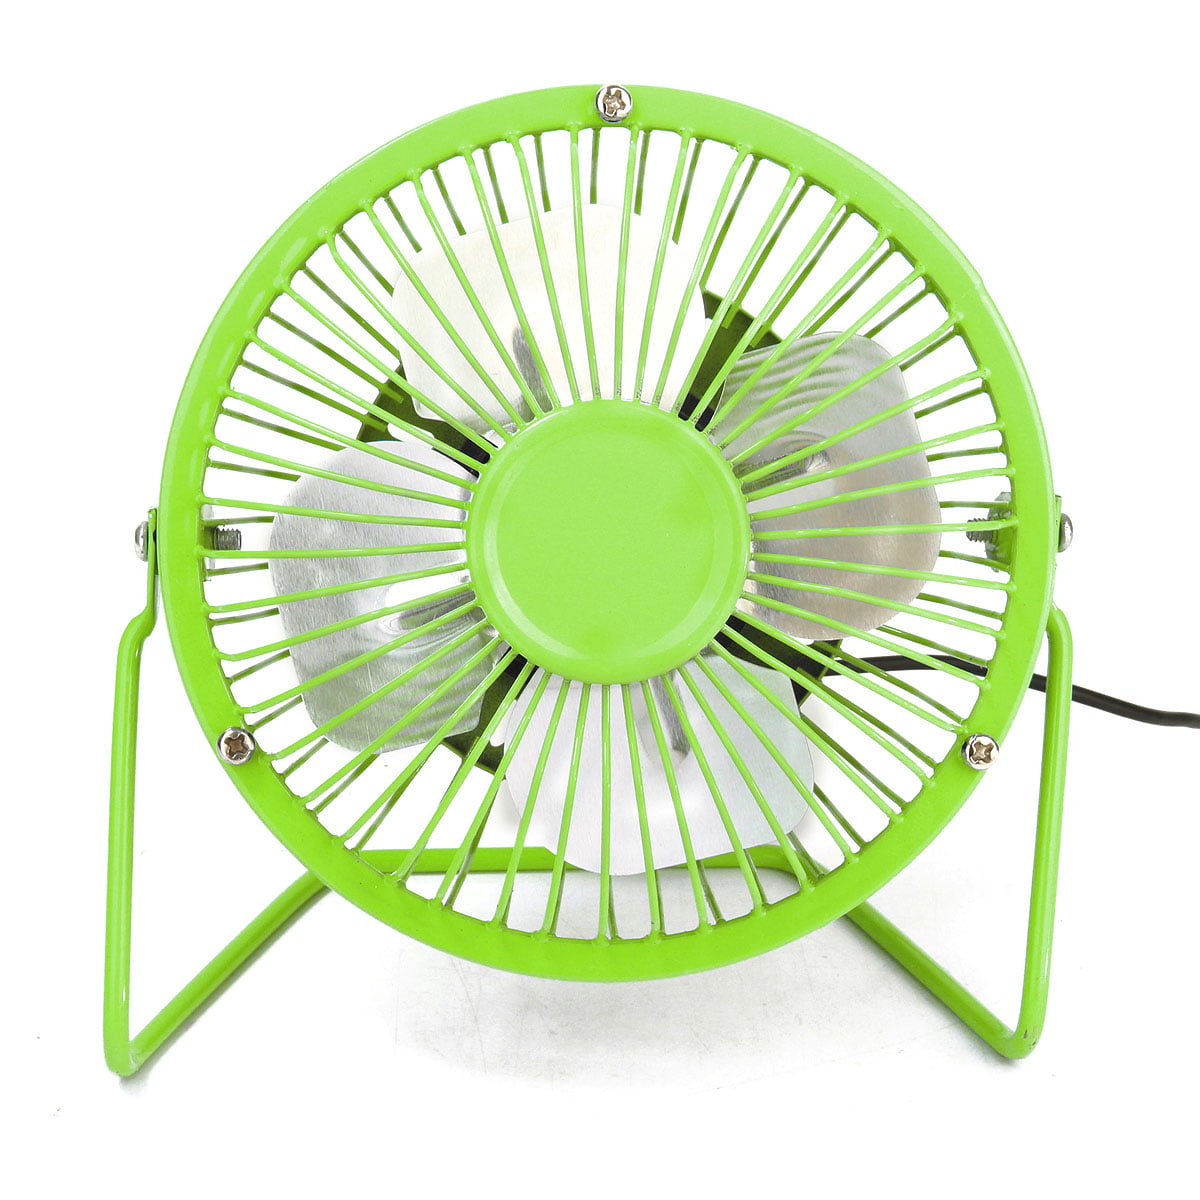 Sky-blue UKCOCO Mini Flexible Fan USB Table Desk Personal Cooling Fan with Night Light for Home Office Bedroom